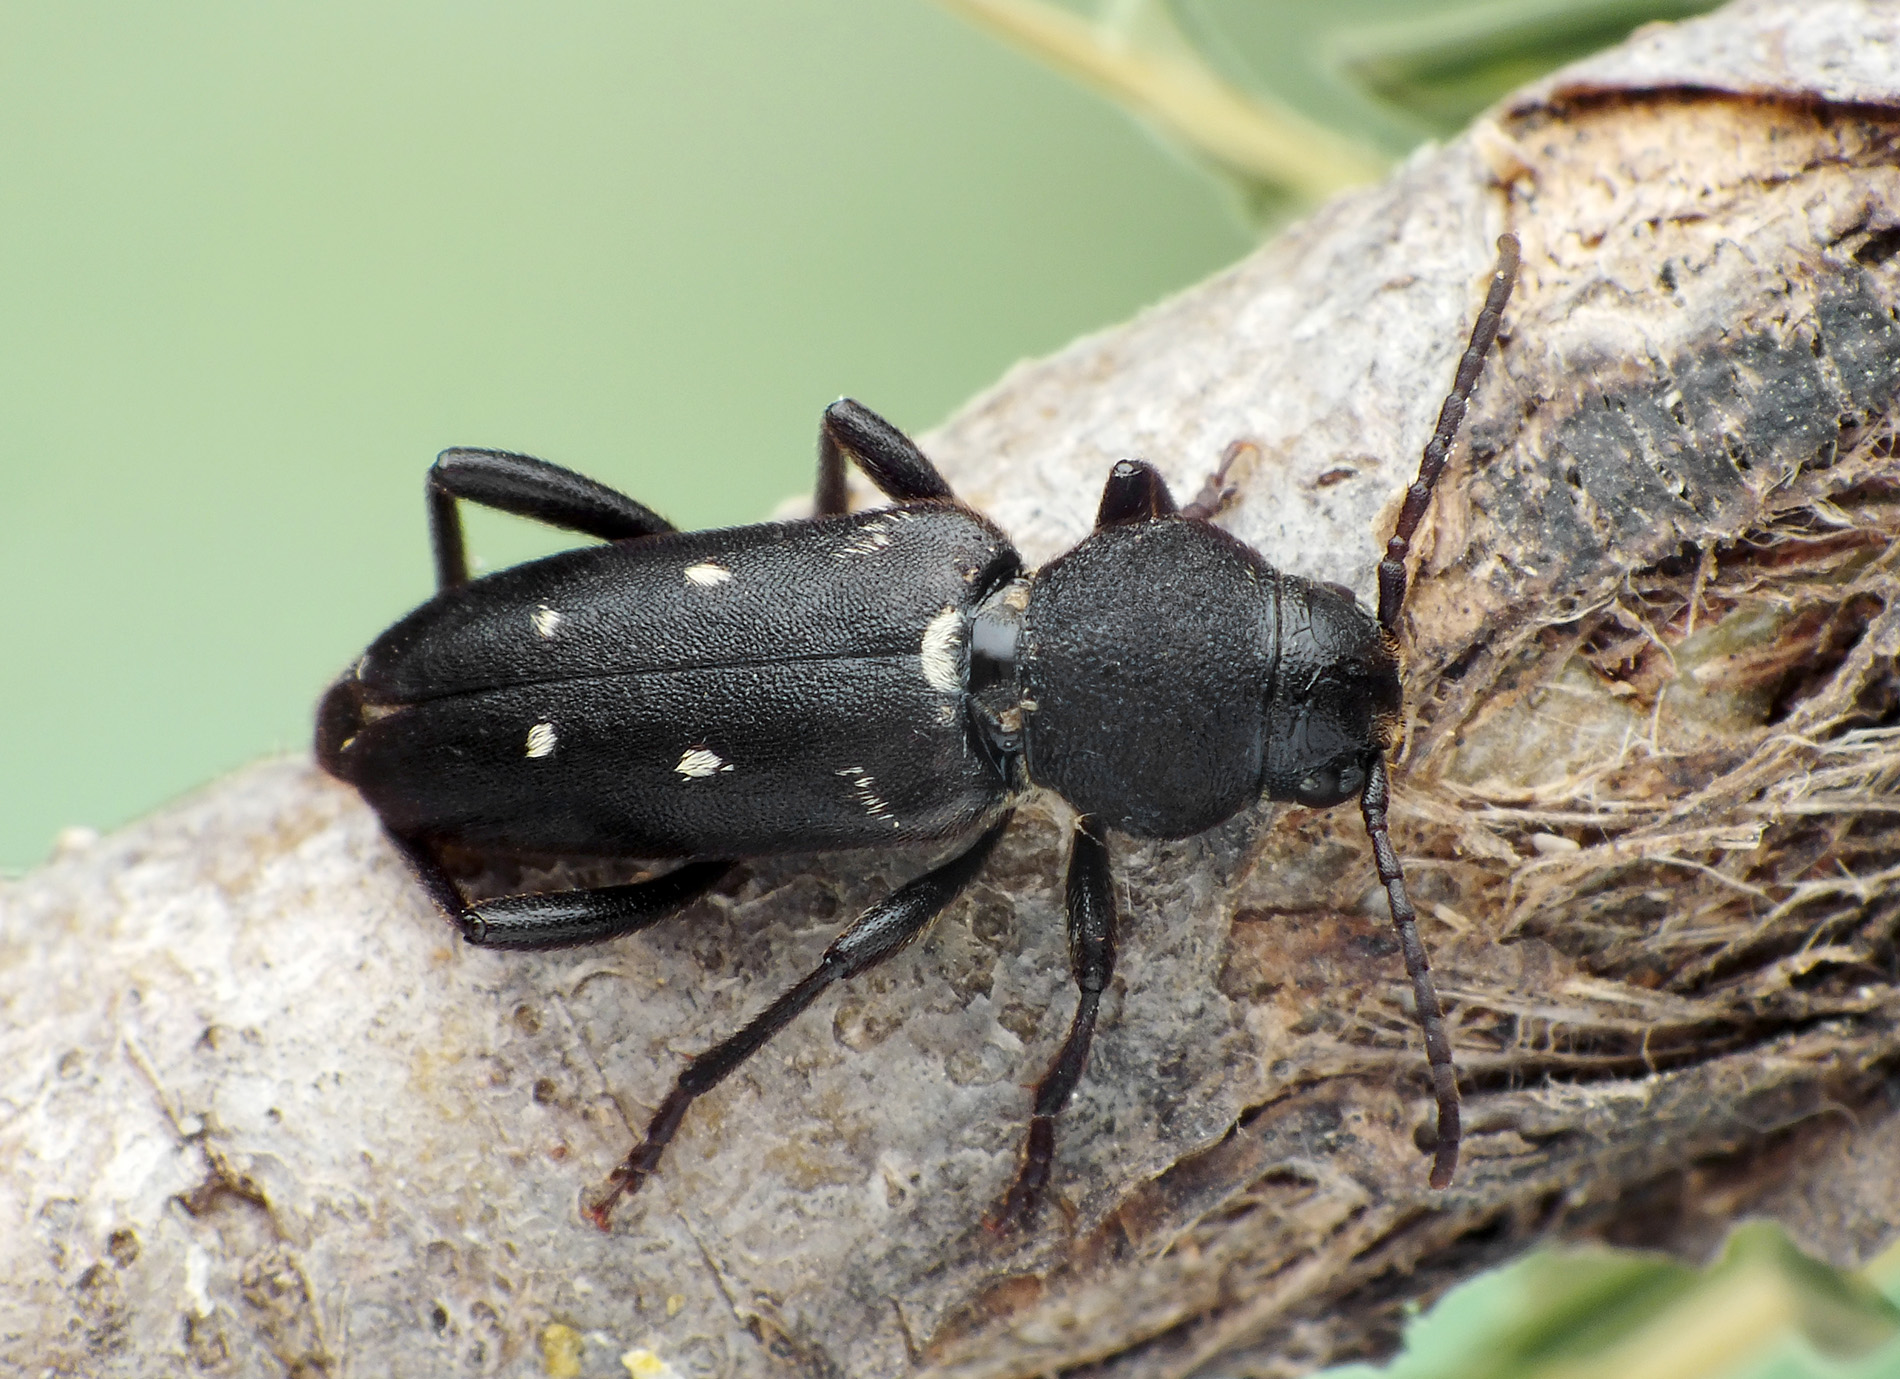 Xylotrechus raghidae